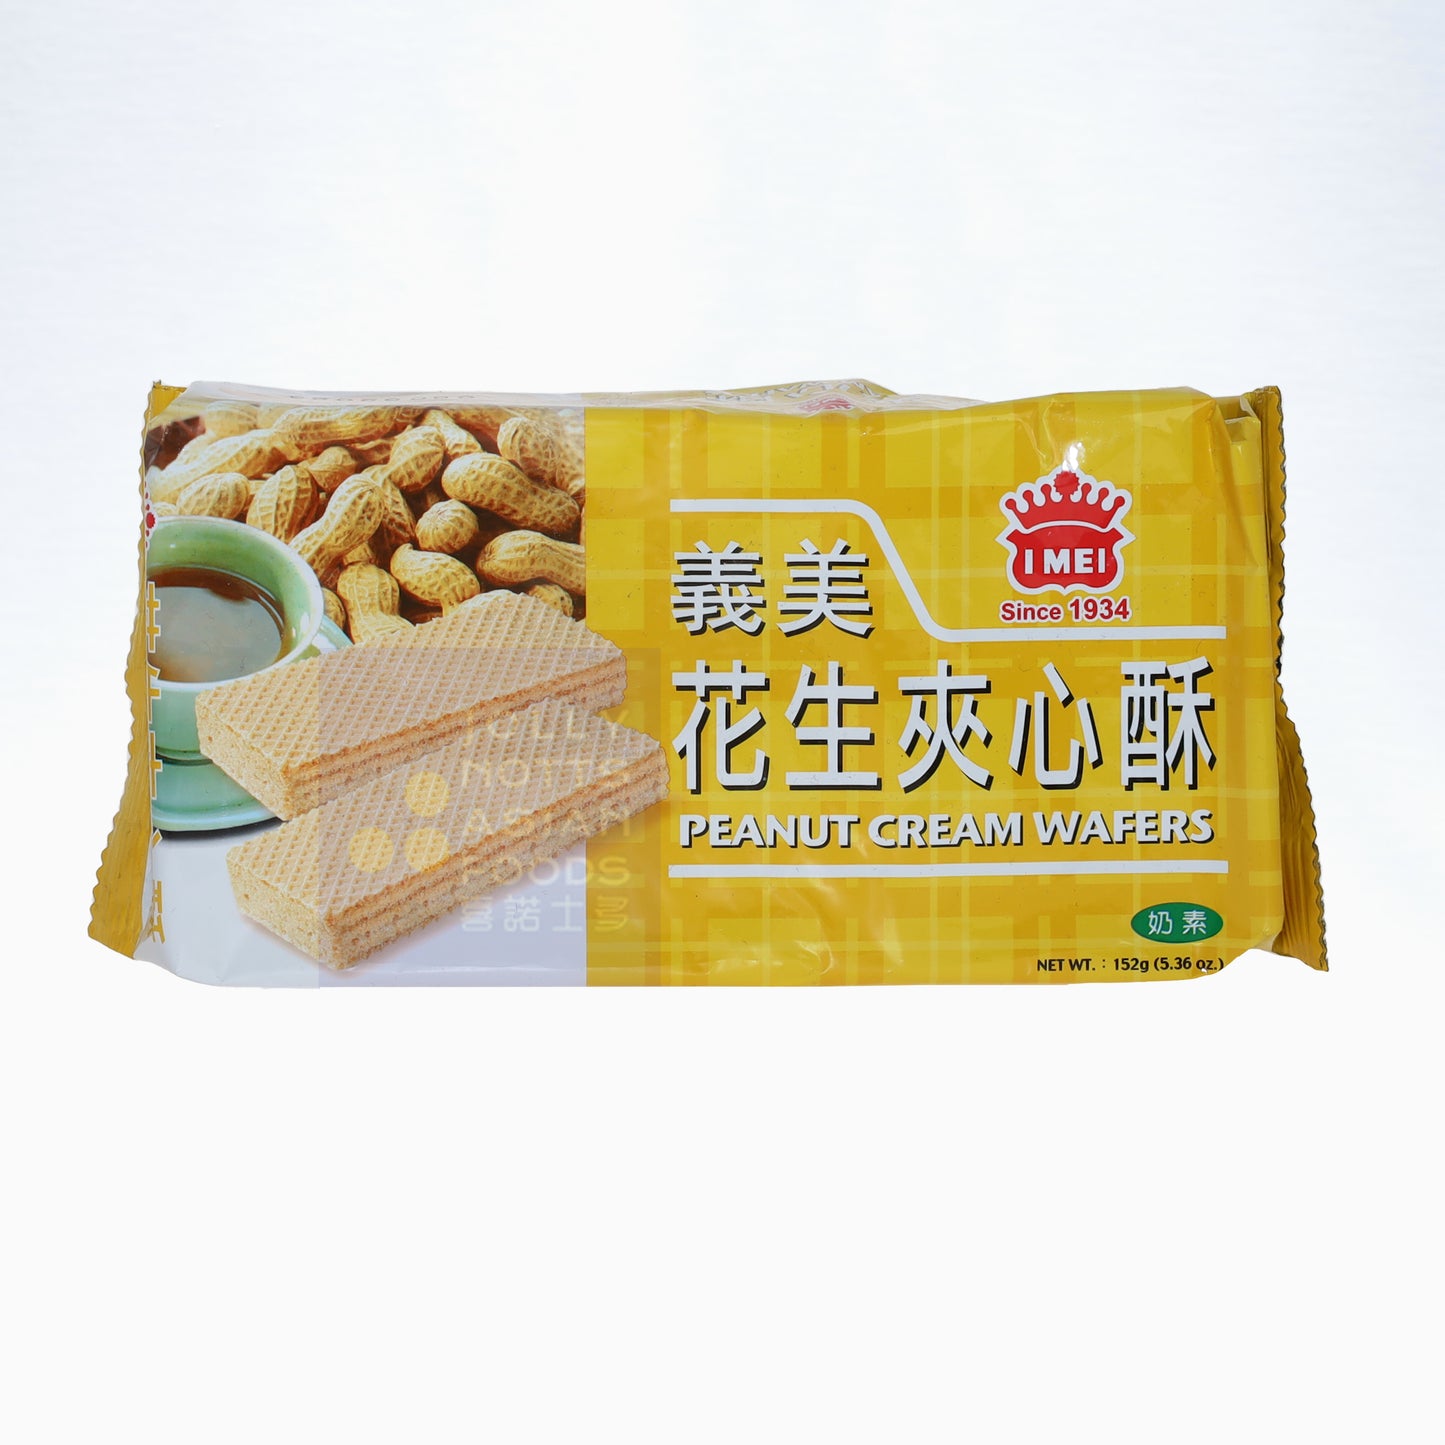 IMEI Peanut Cream Wafers 義美花生威化餅乾 152g